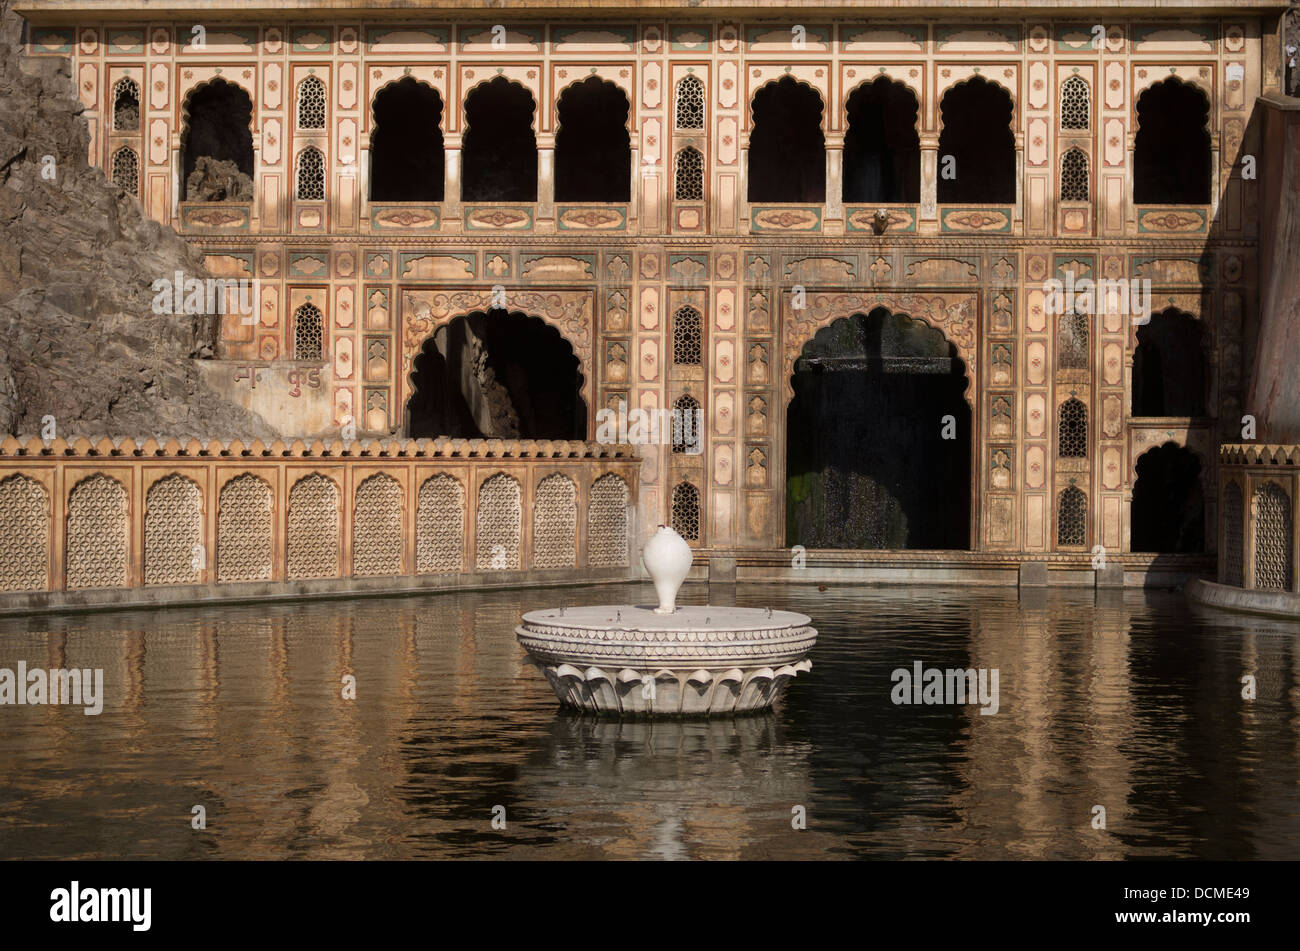 Galta Monkey Palace / Temple - Jaipur, Rajasthan, India Foto Stock